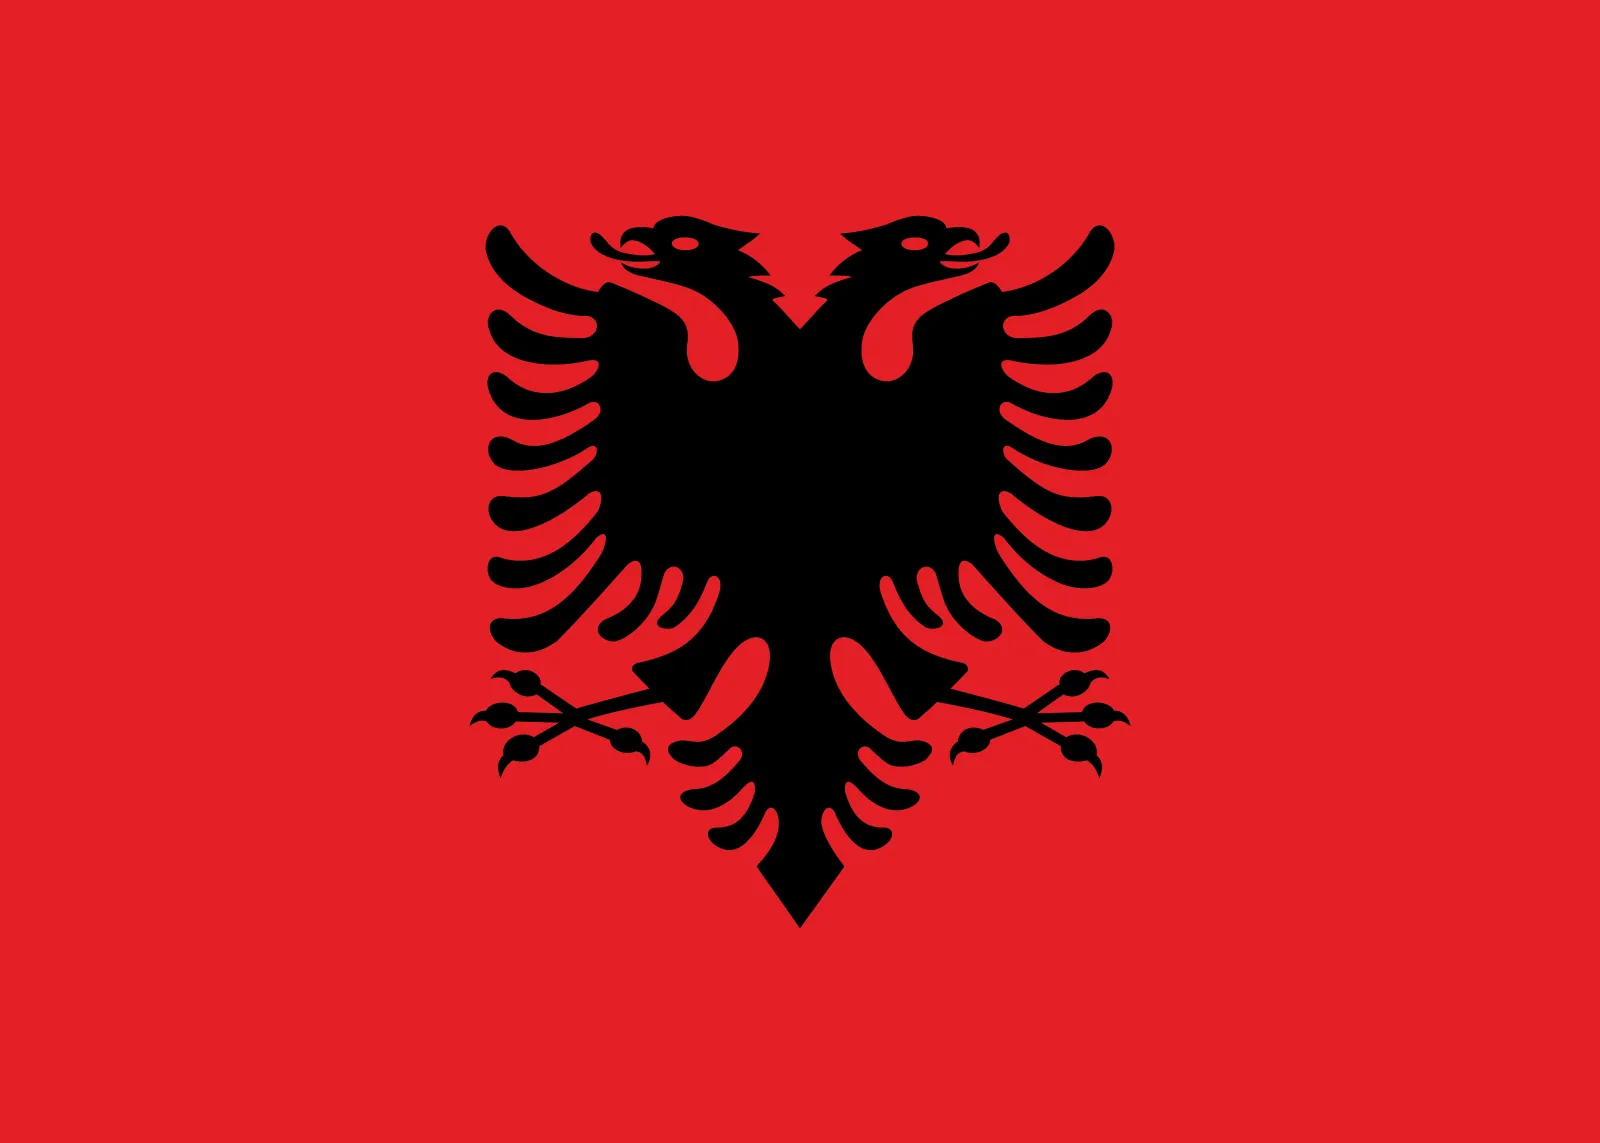 Flag Albania